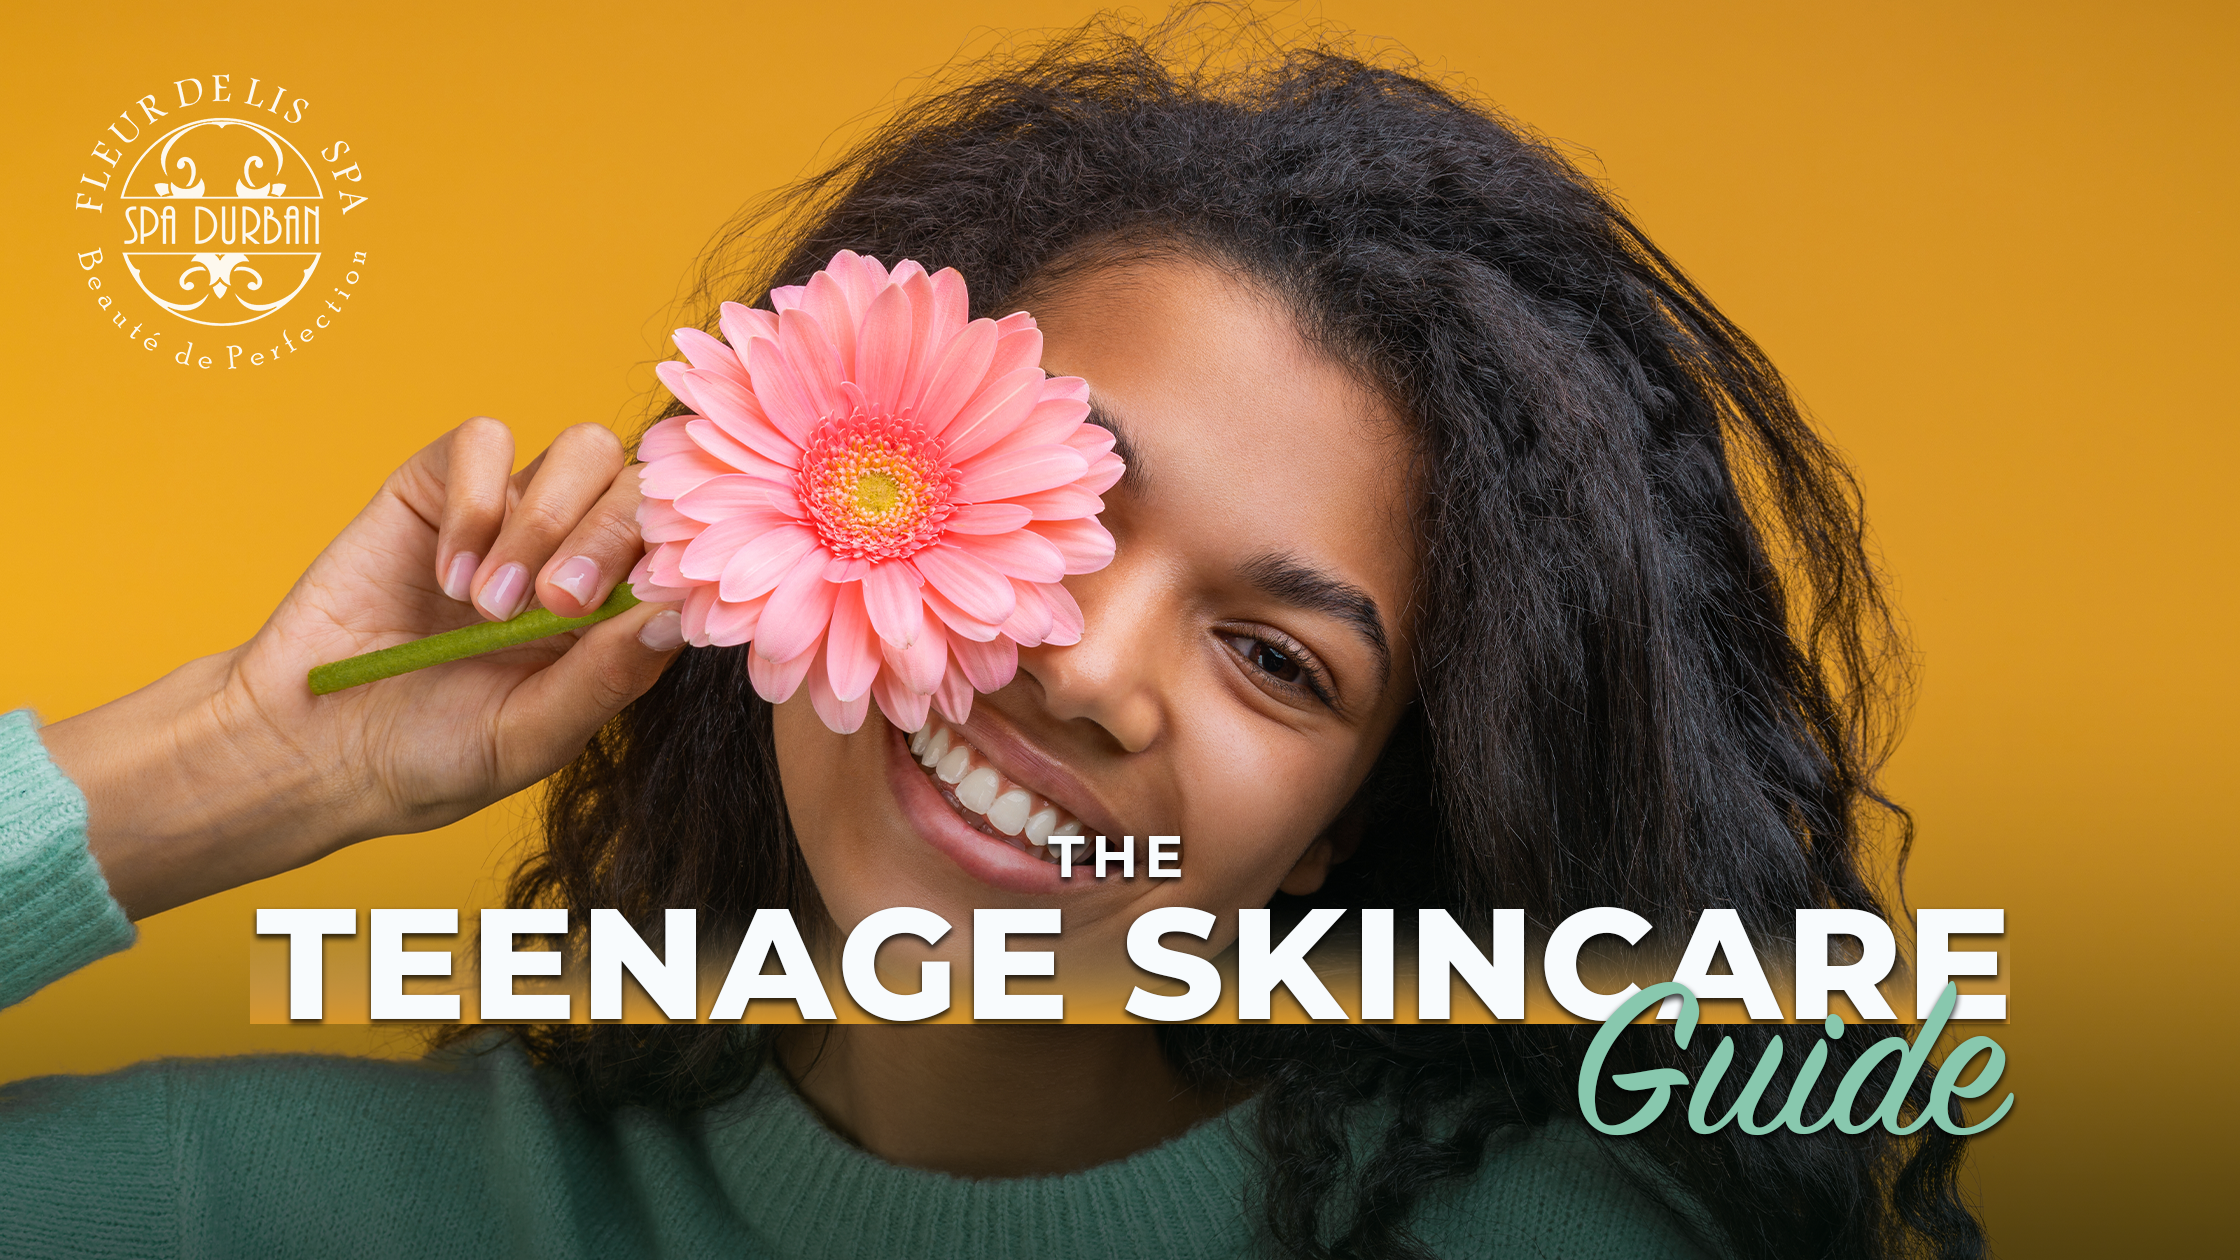 The Teenage Skincare Guide